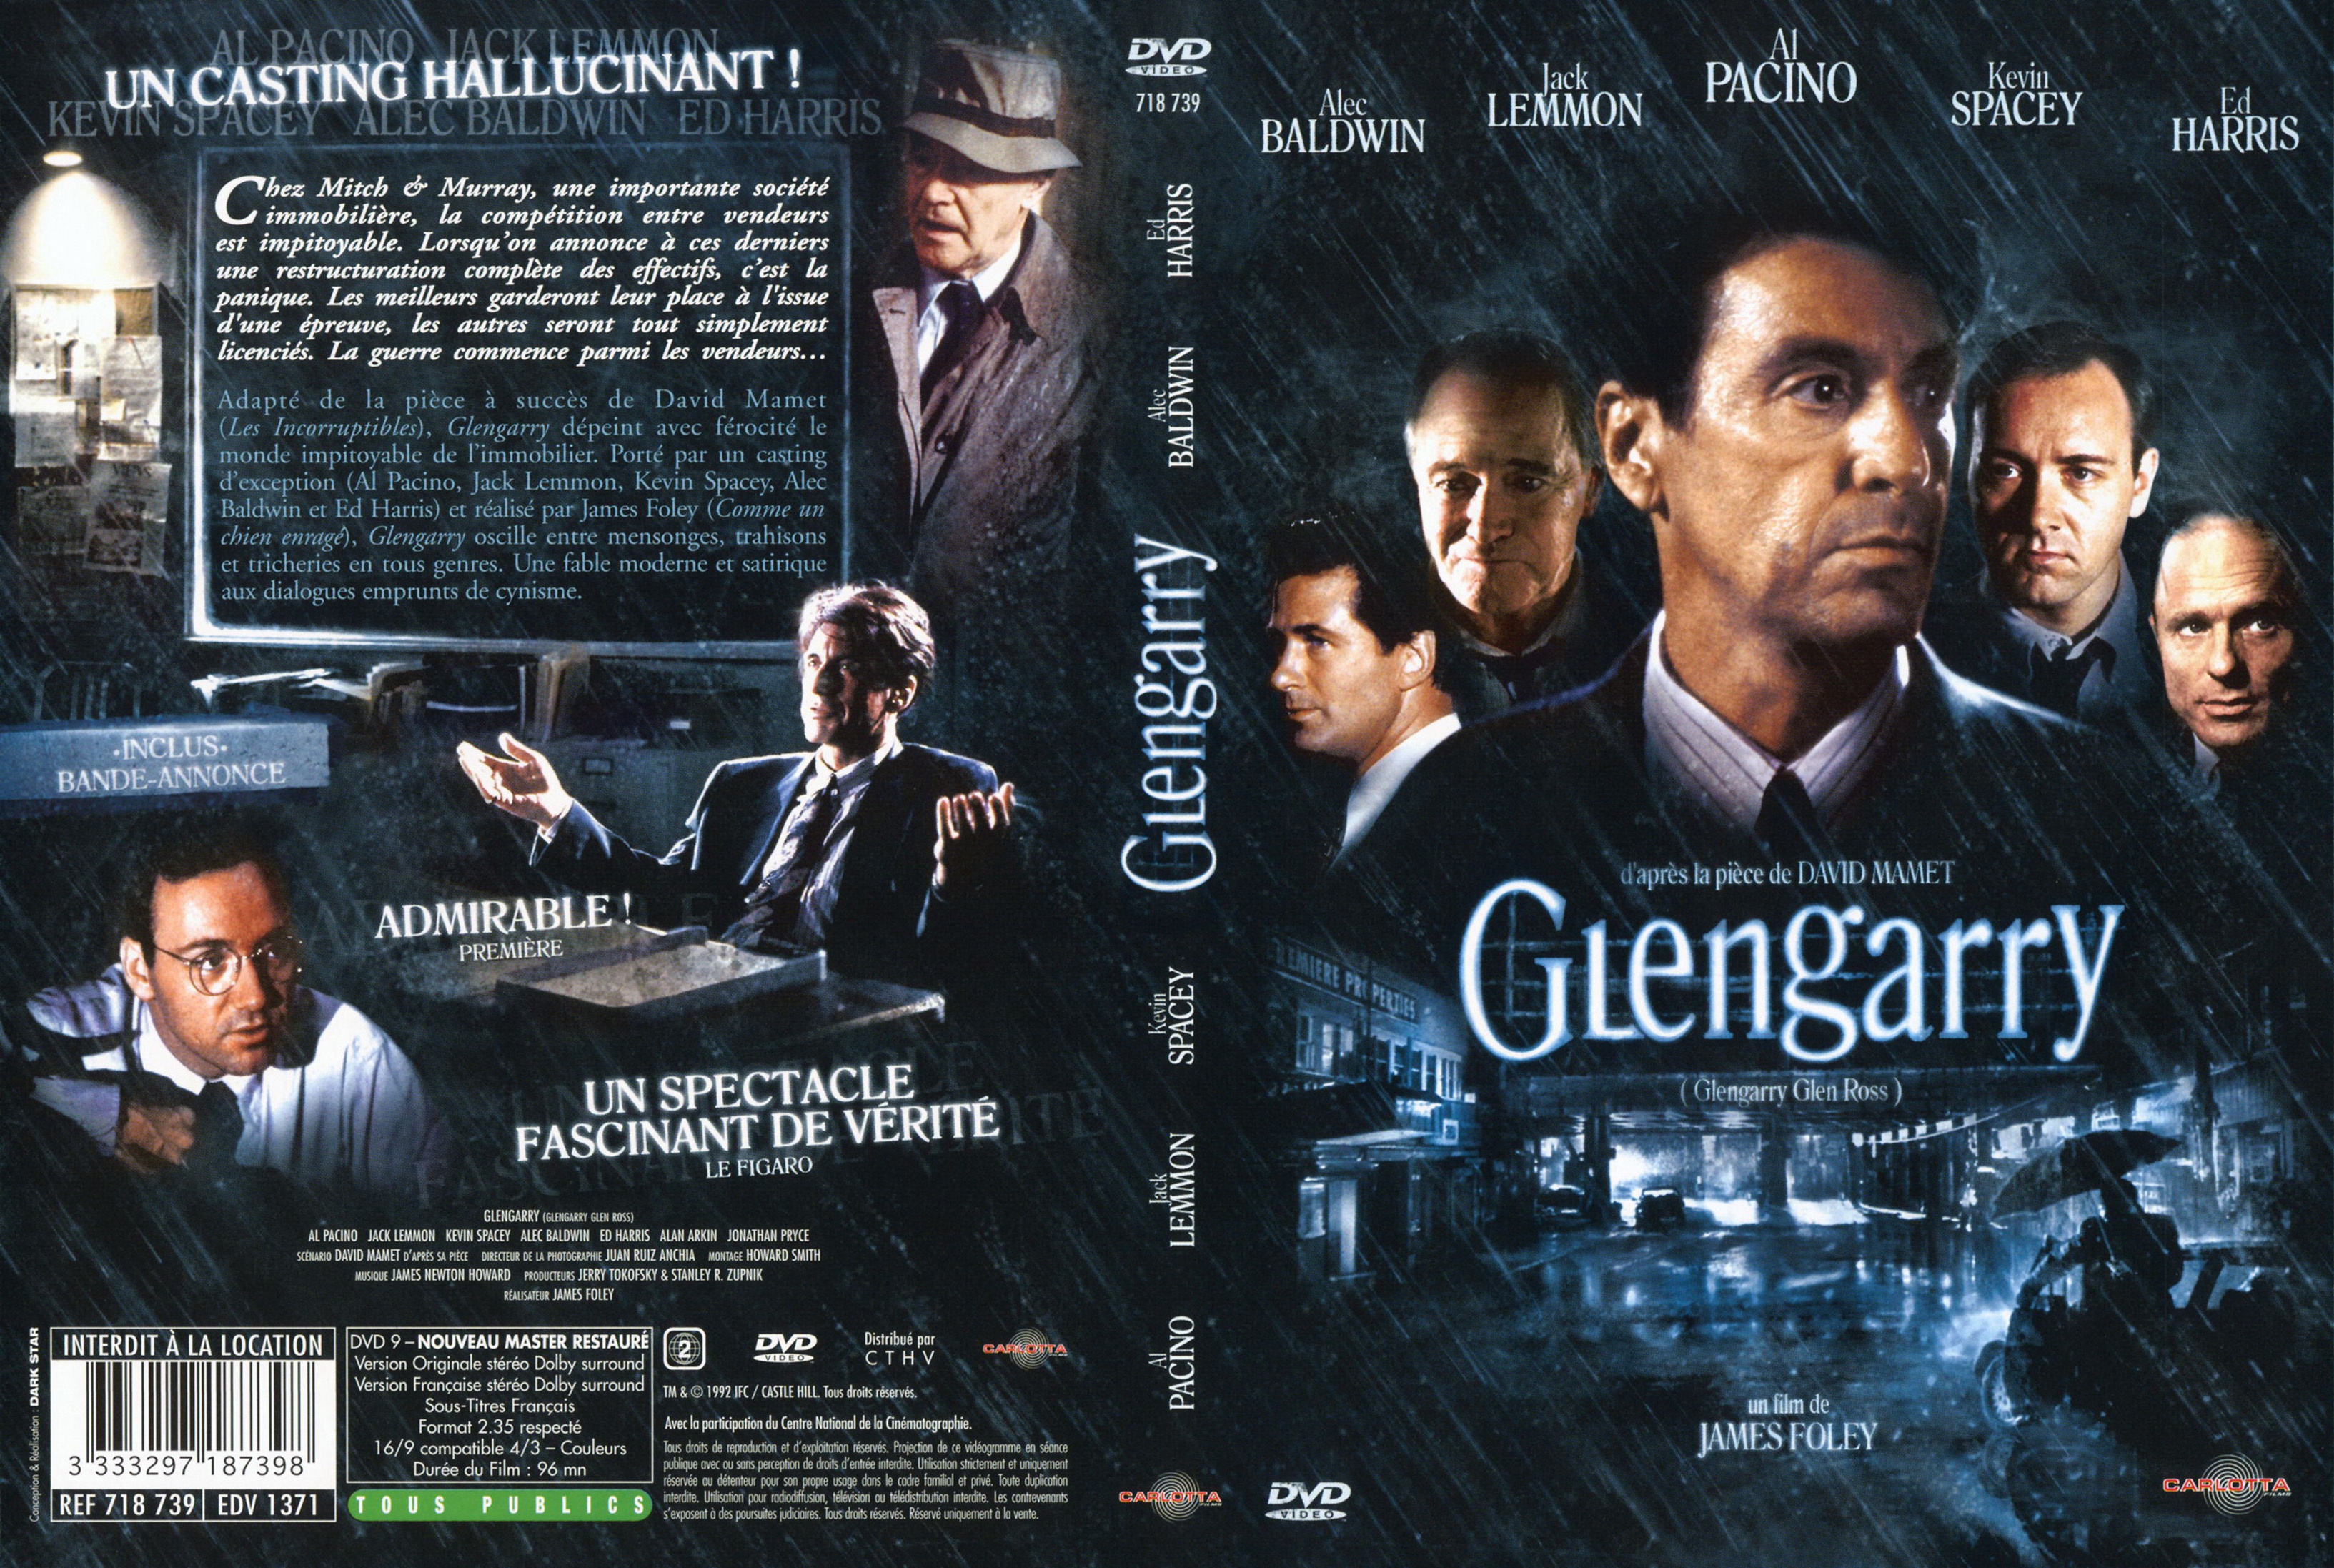 Jaquette DVD Glengarry